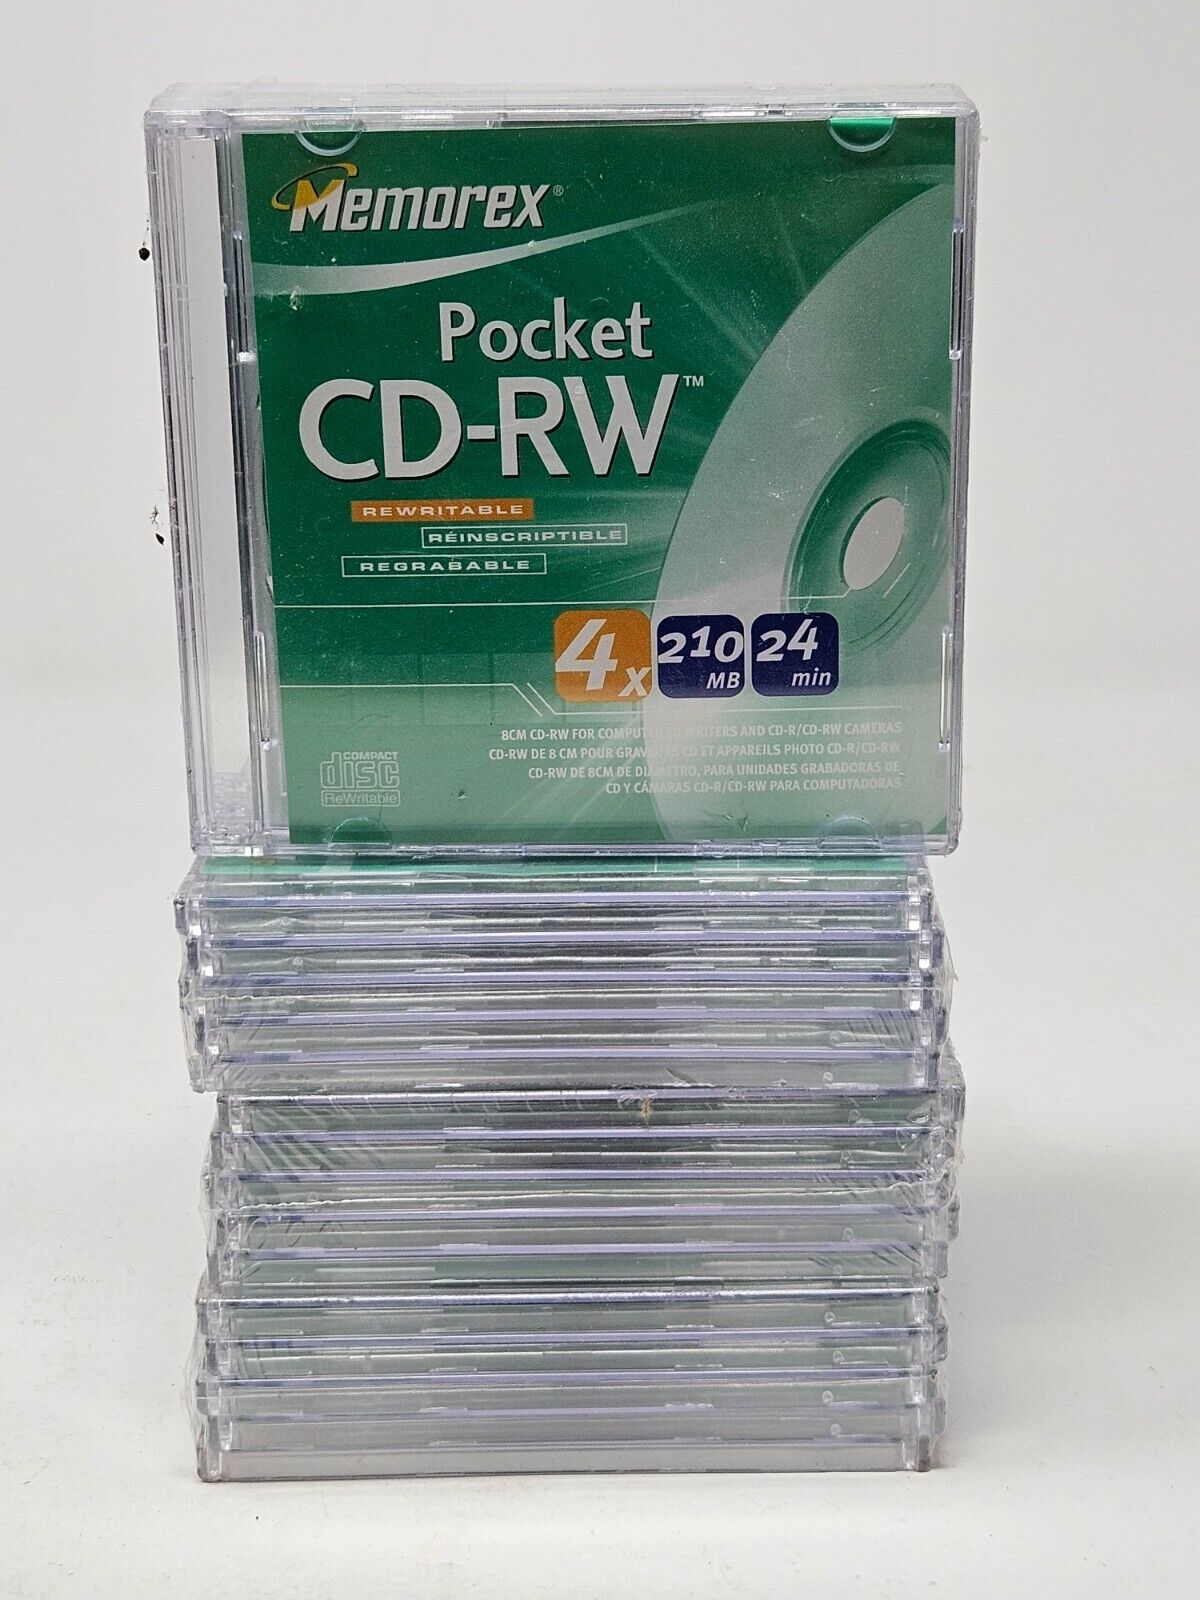 Memorex Pocket CD-RW 8cm Rewritable 210 MB 24 Minute 4x  5-Pack lot of 4